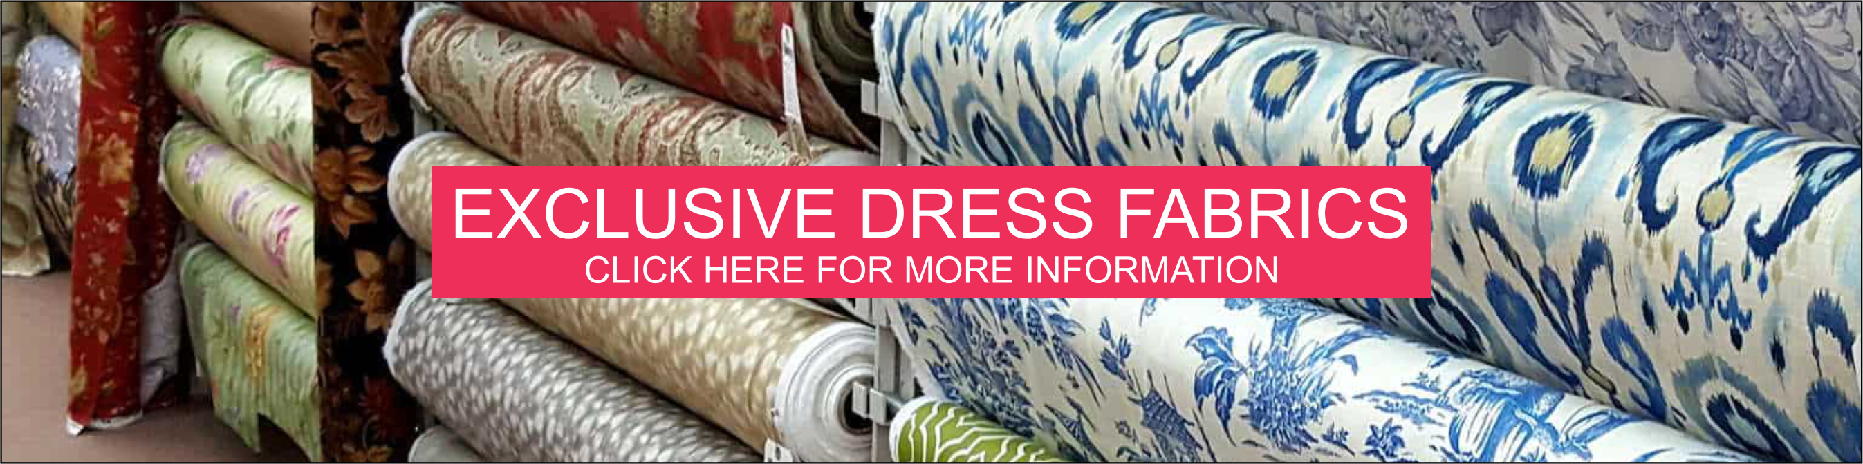 Exclusive Dress Fabrics